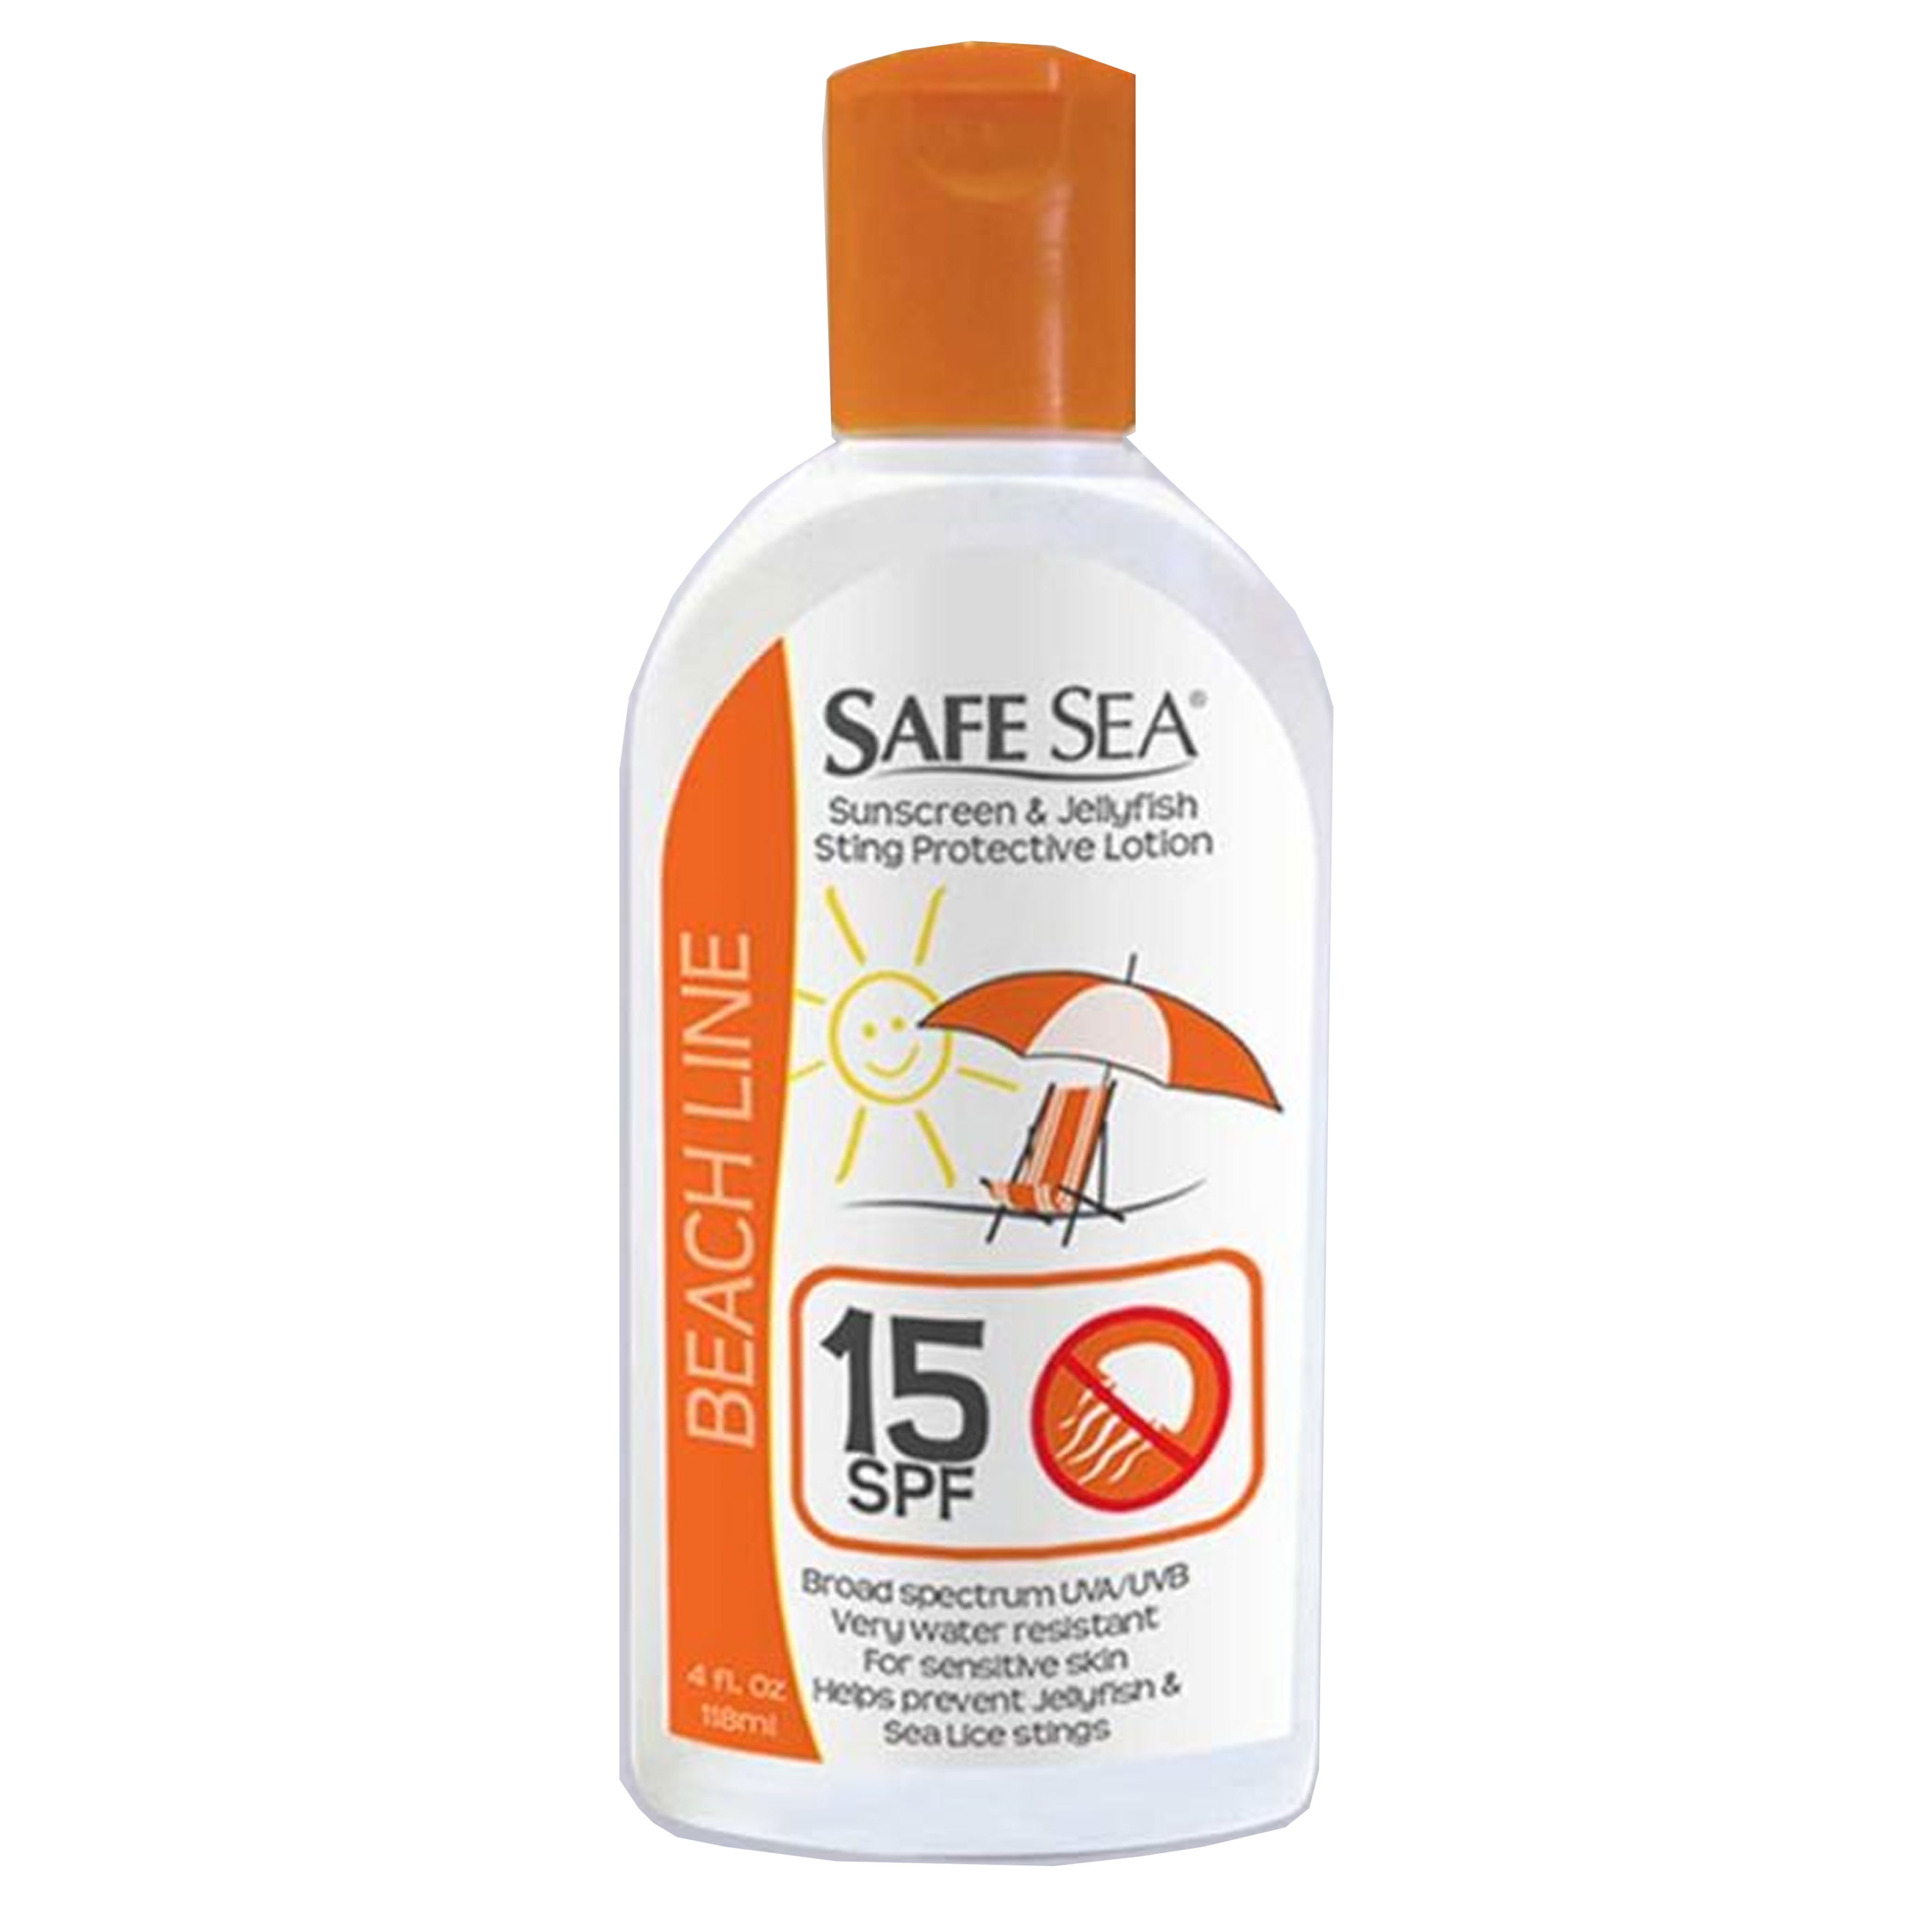 Safe Sea Sunscreen Jellyfish Sting Protection SPF15 Prevent Sting - Walmart.com